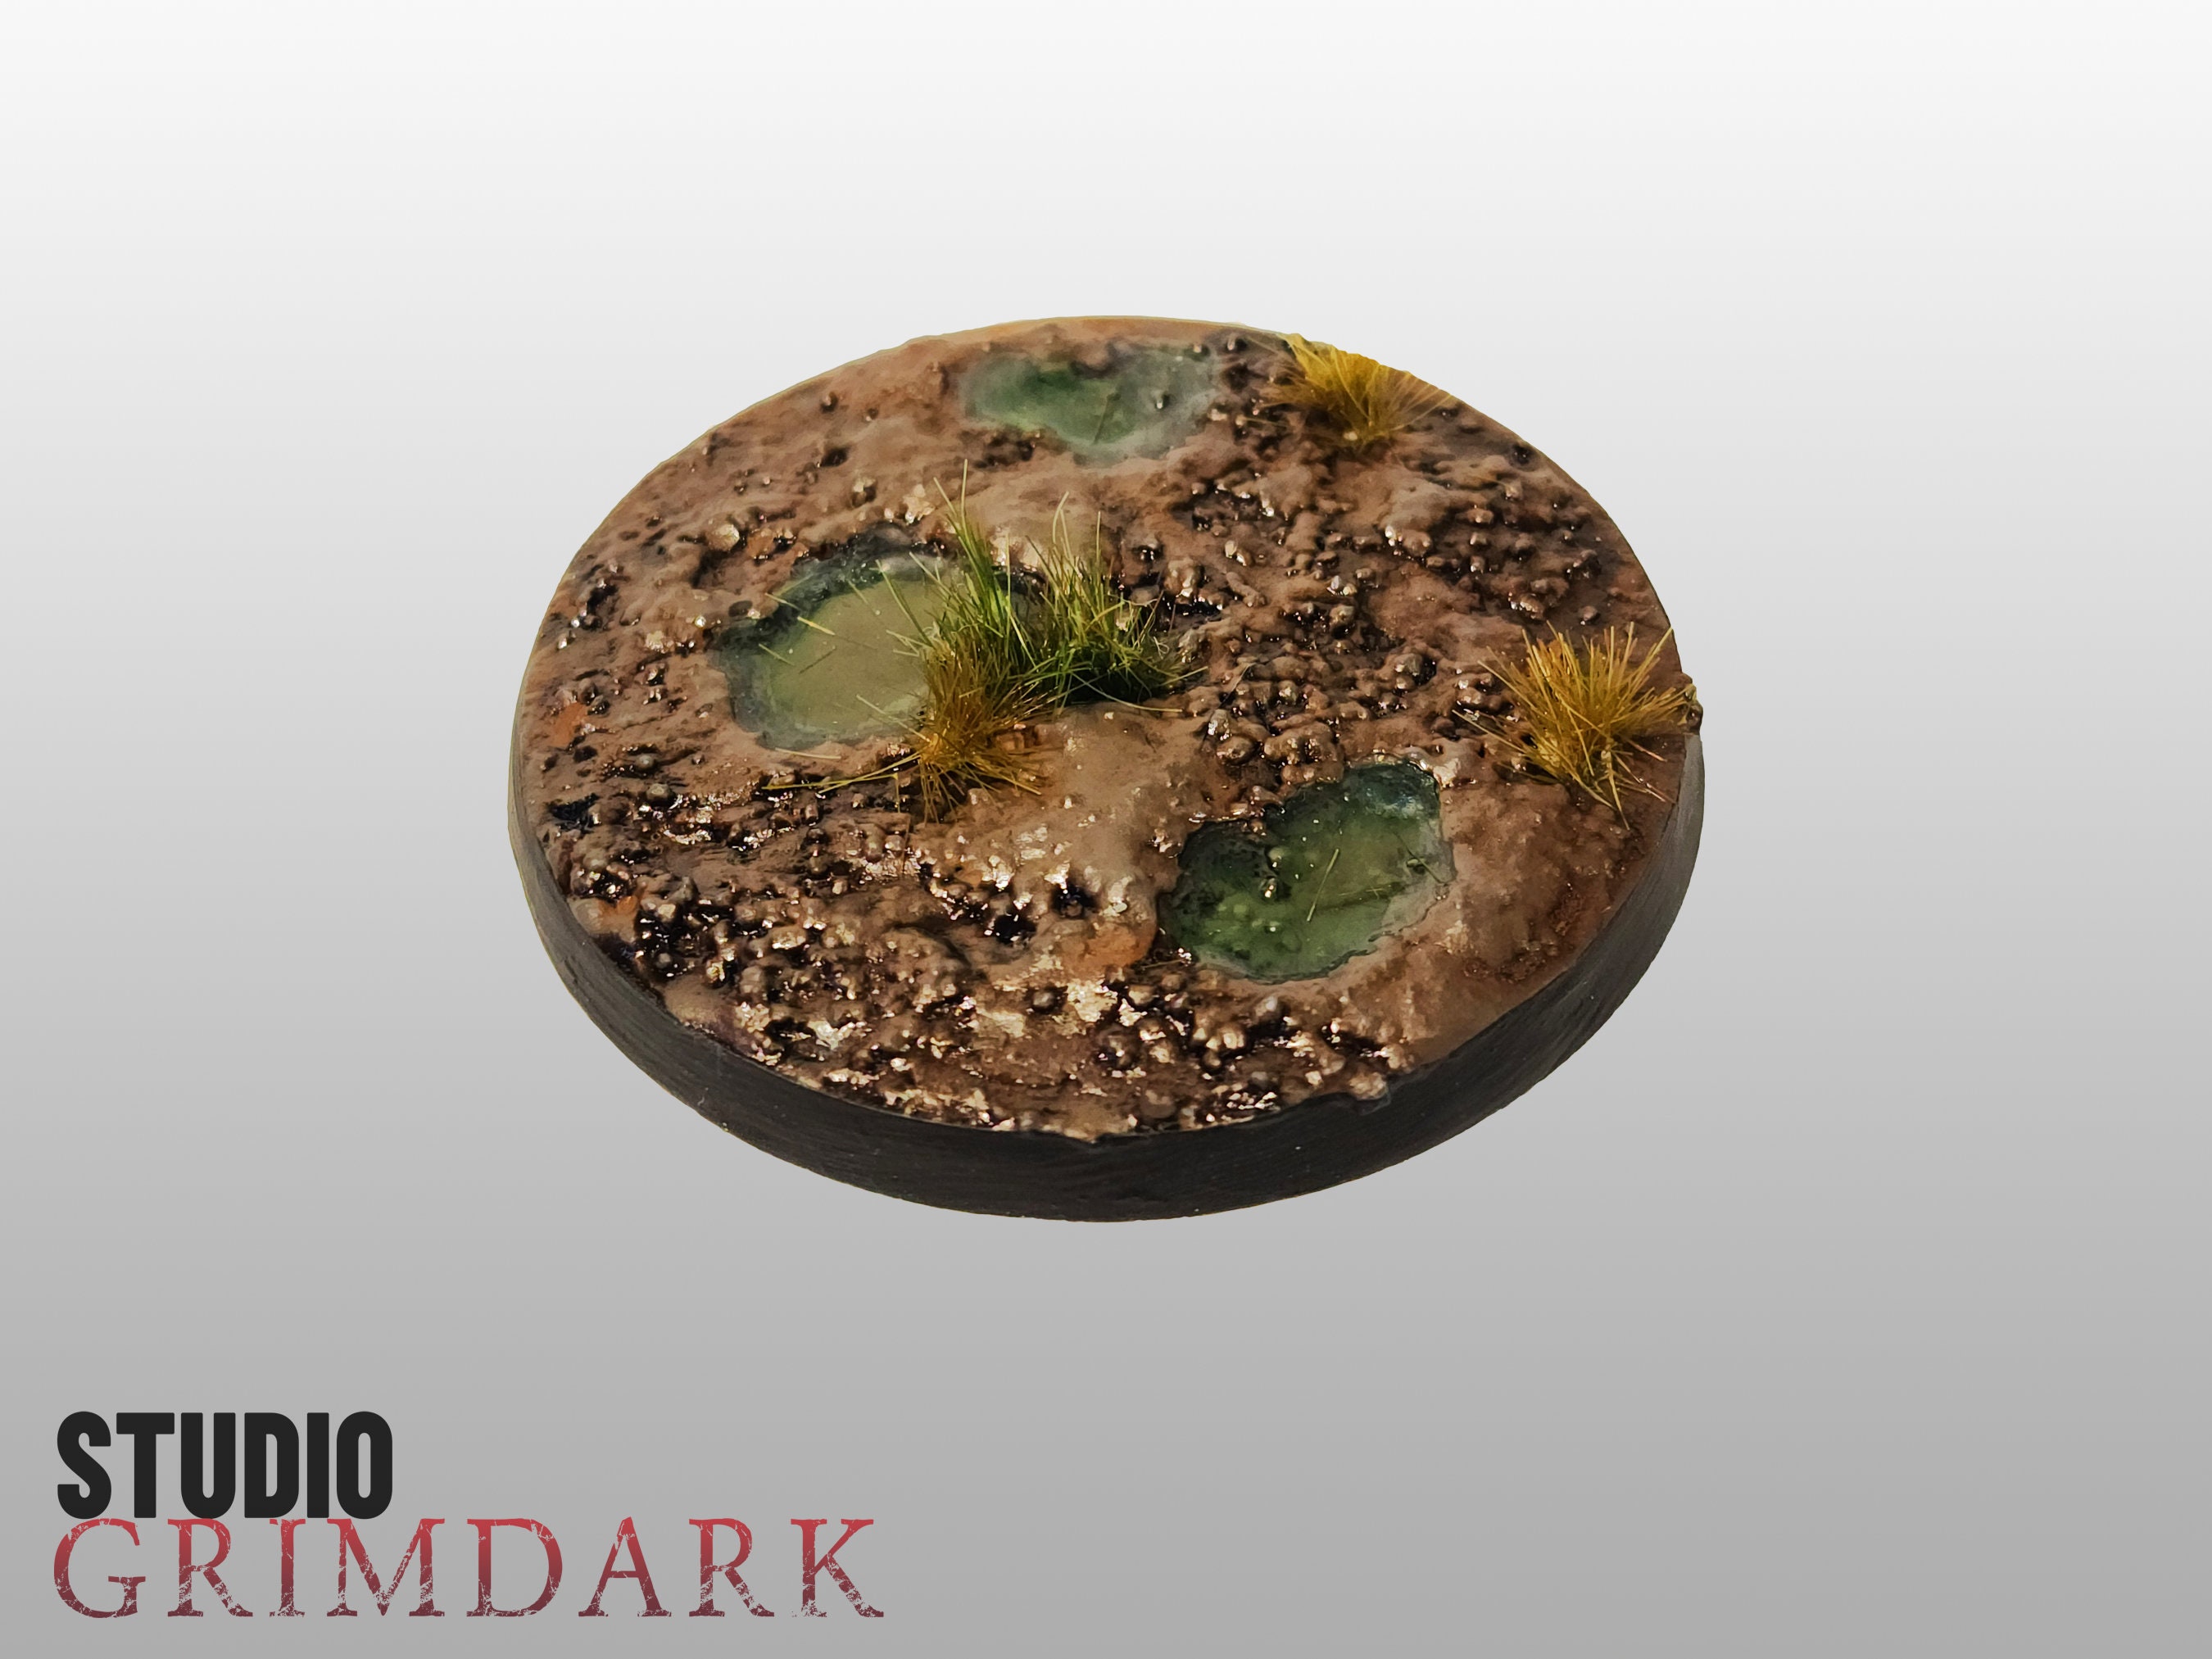 SB-137 Wargame Miniature Basing Material - Martian Landscape 4oz